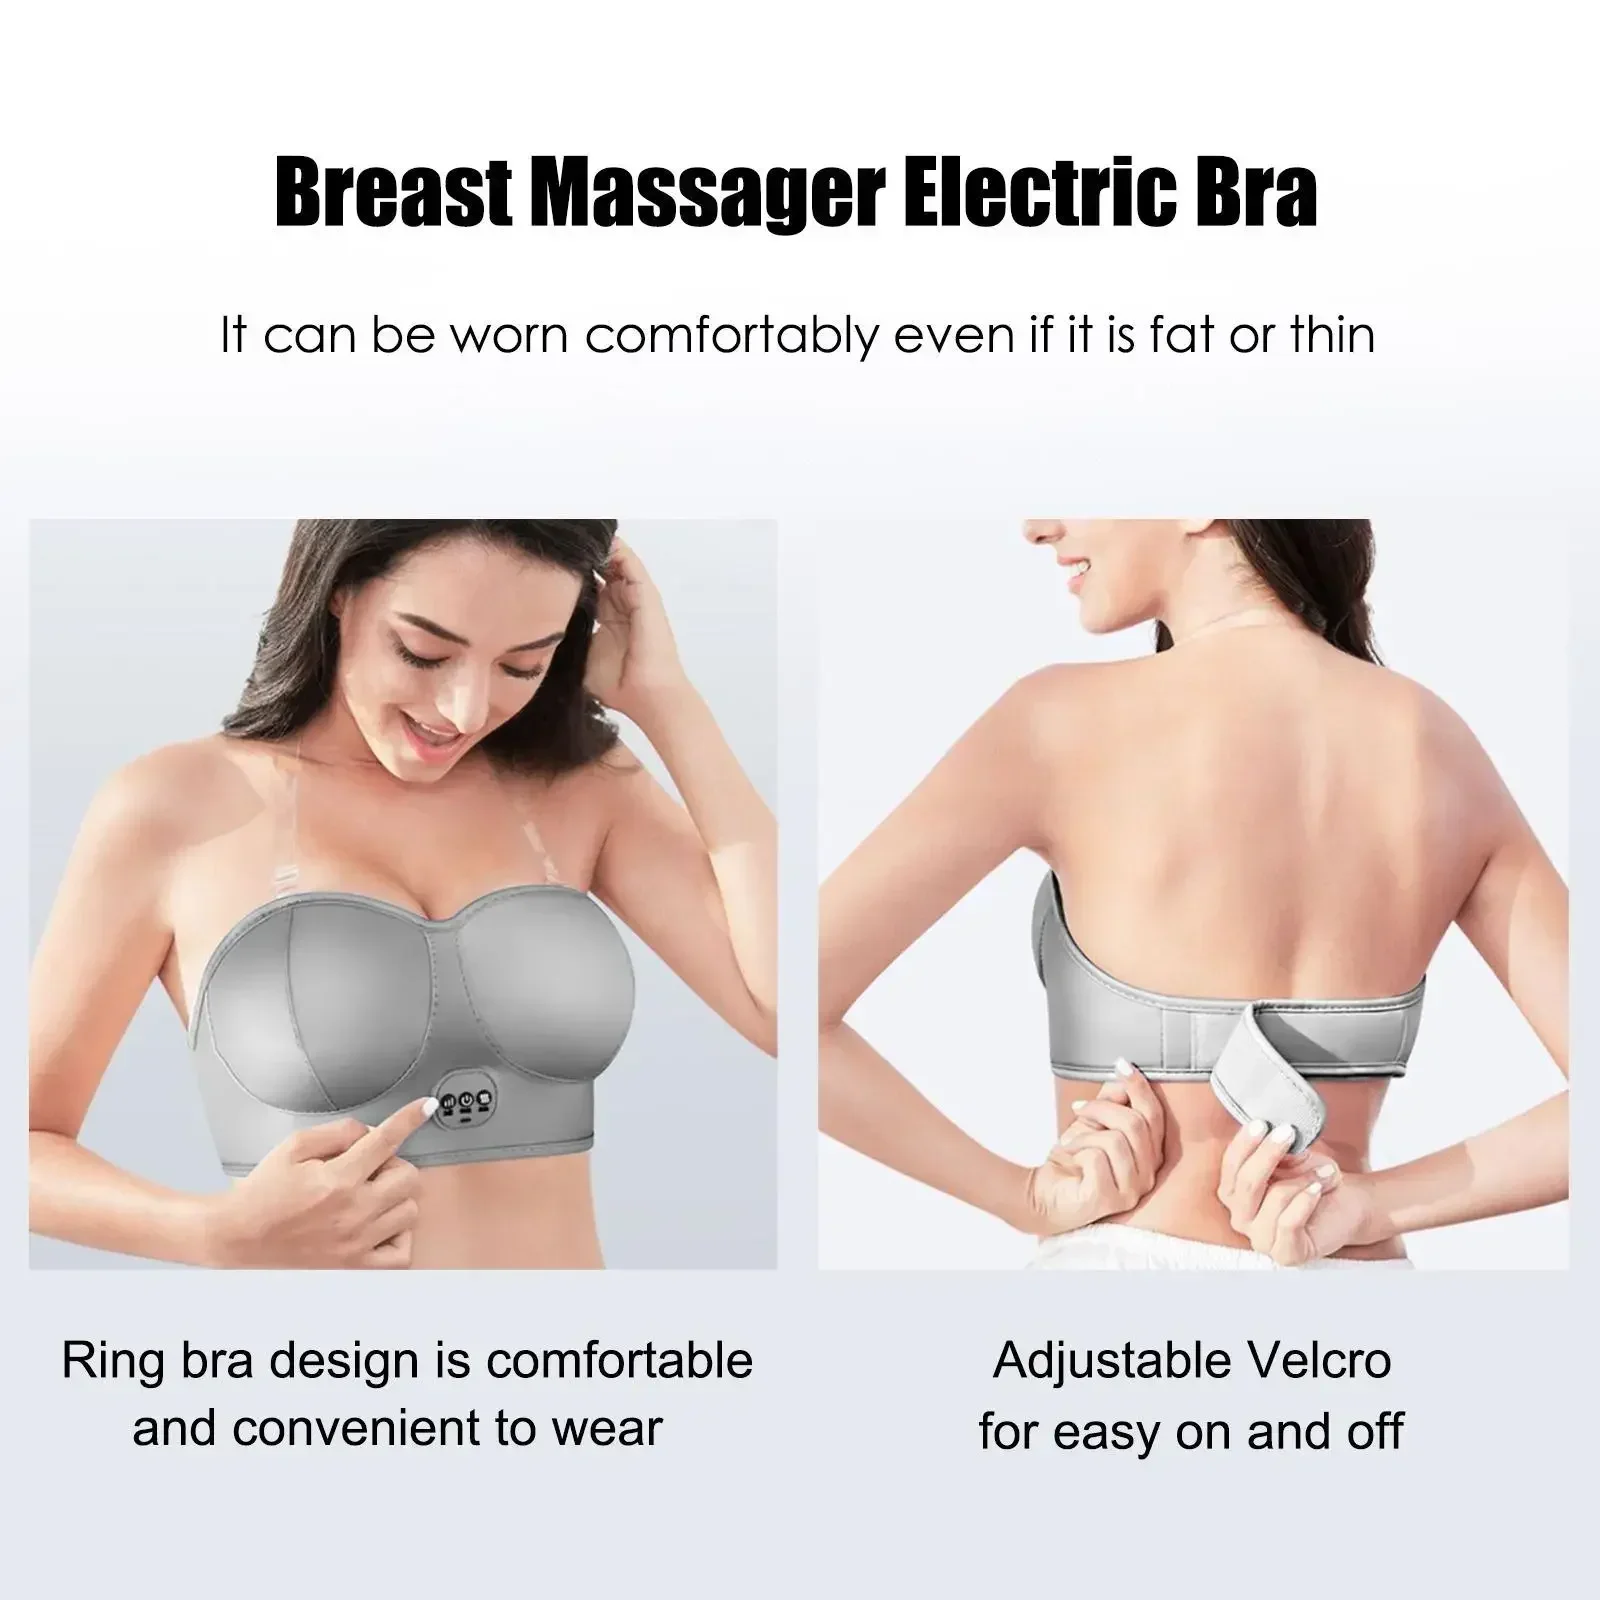 Sf1c4566f14ca4291b84b23916becebe7F Electric Breast Massage Bra Electronic Vibration Chest Massager Breast Enhancement Instrument Breast Heating Stimulator Machine